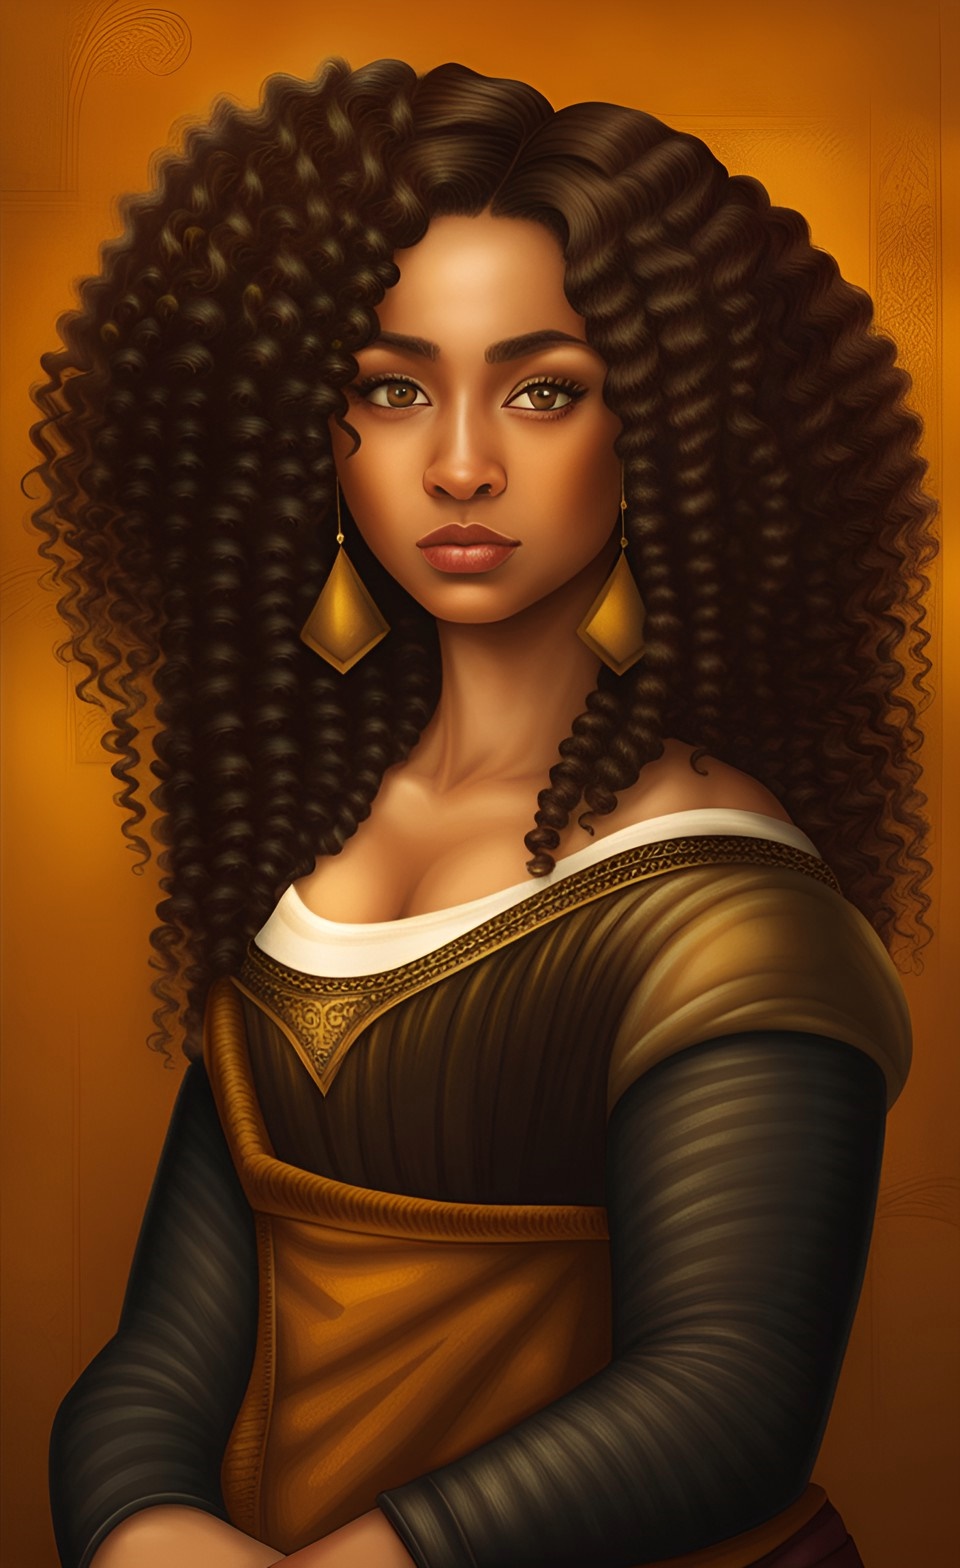 Beautiful art work of mixed-race women Dreamc21